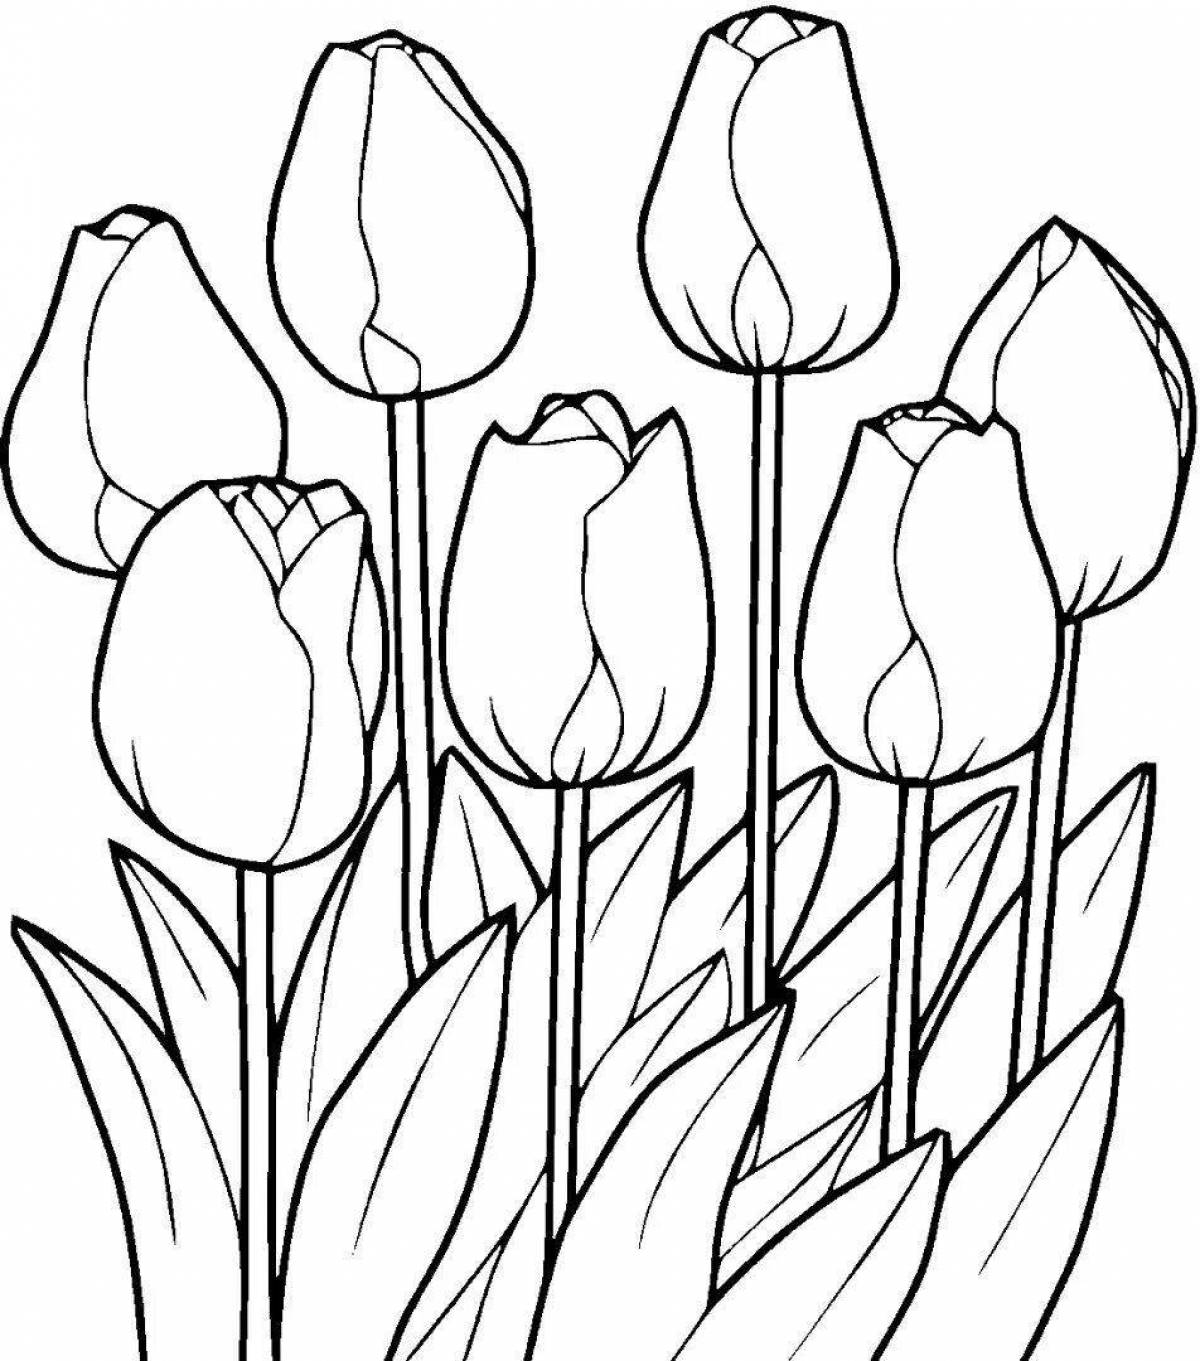 Bright tulip coloring page